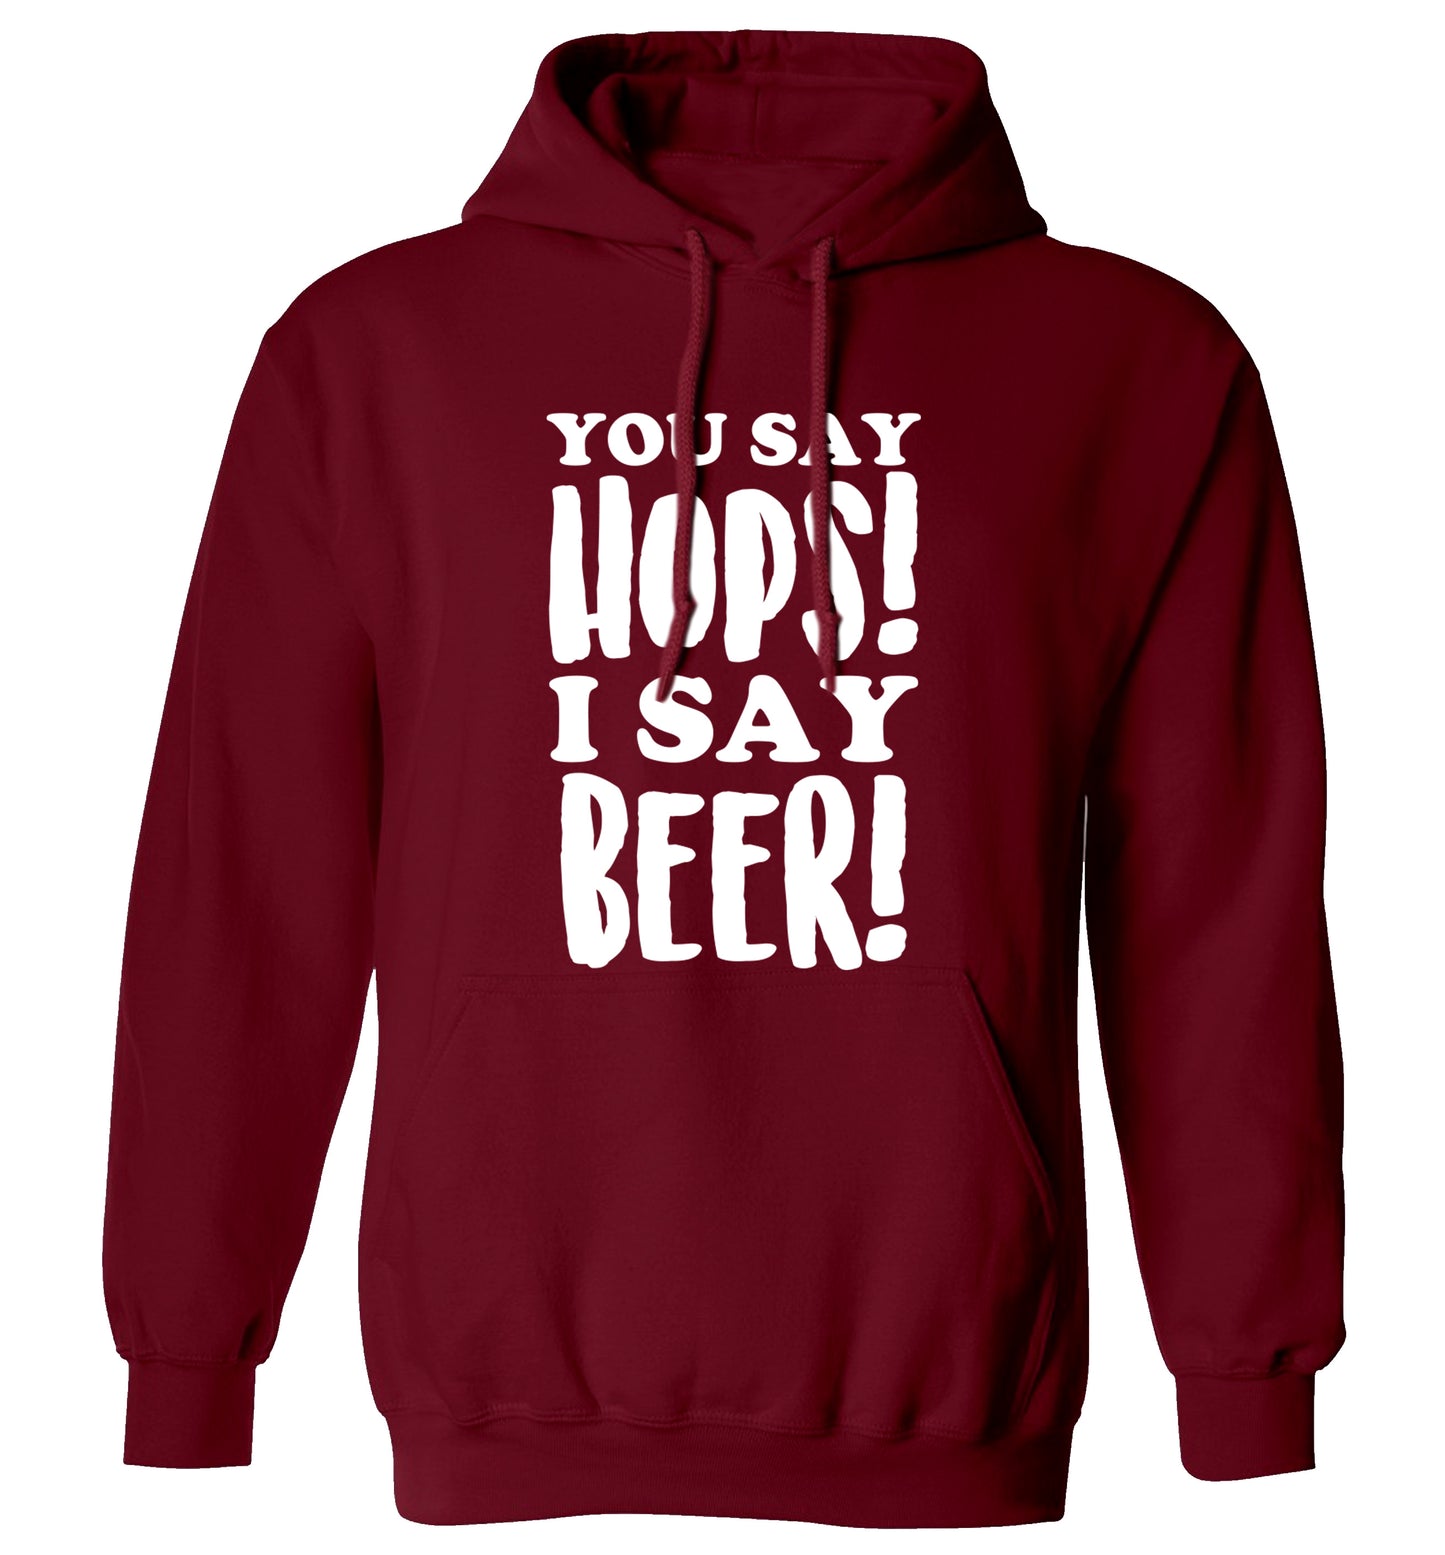 You say hops I say beer! adults unisex maroon hoodie 2XL